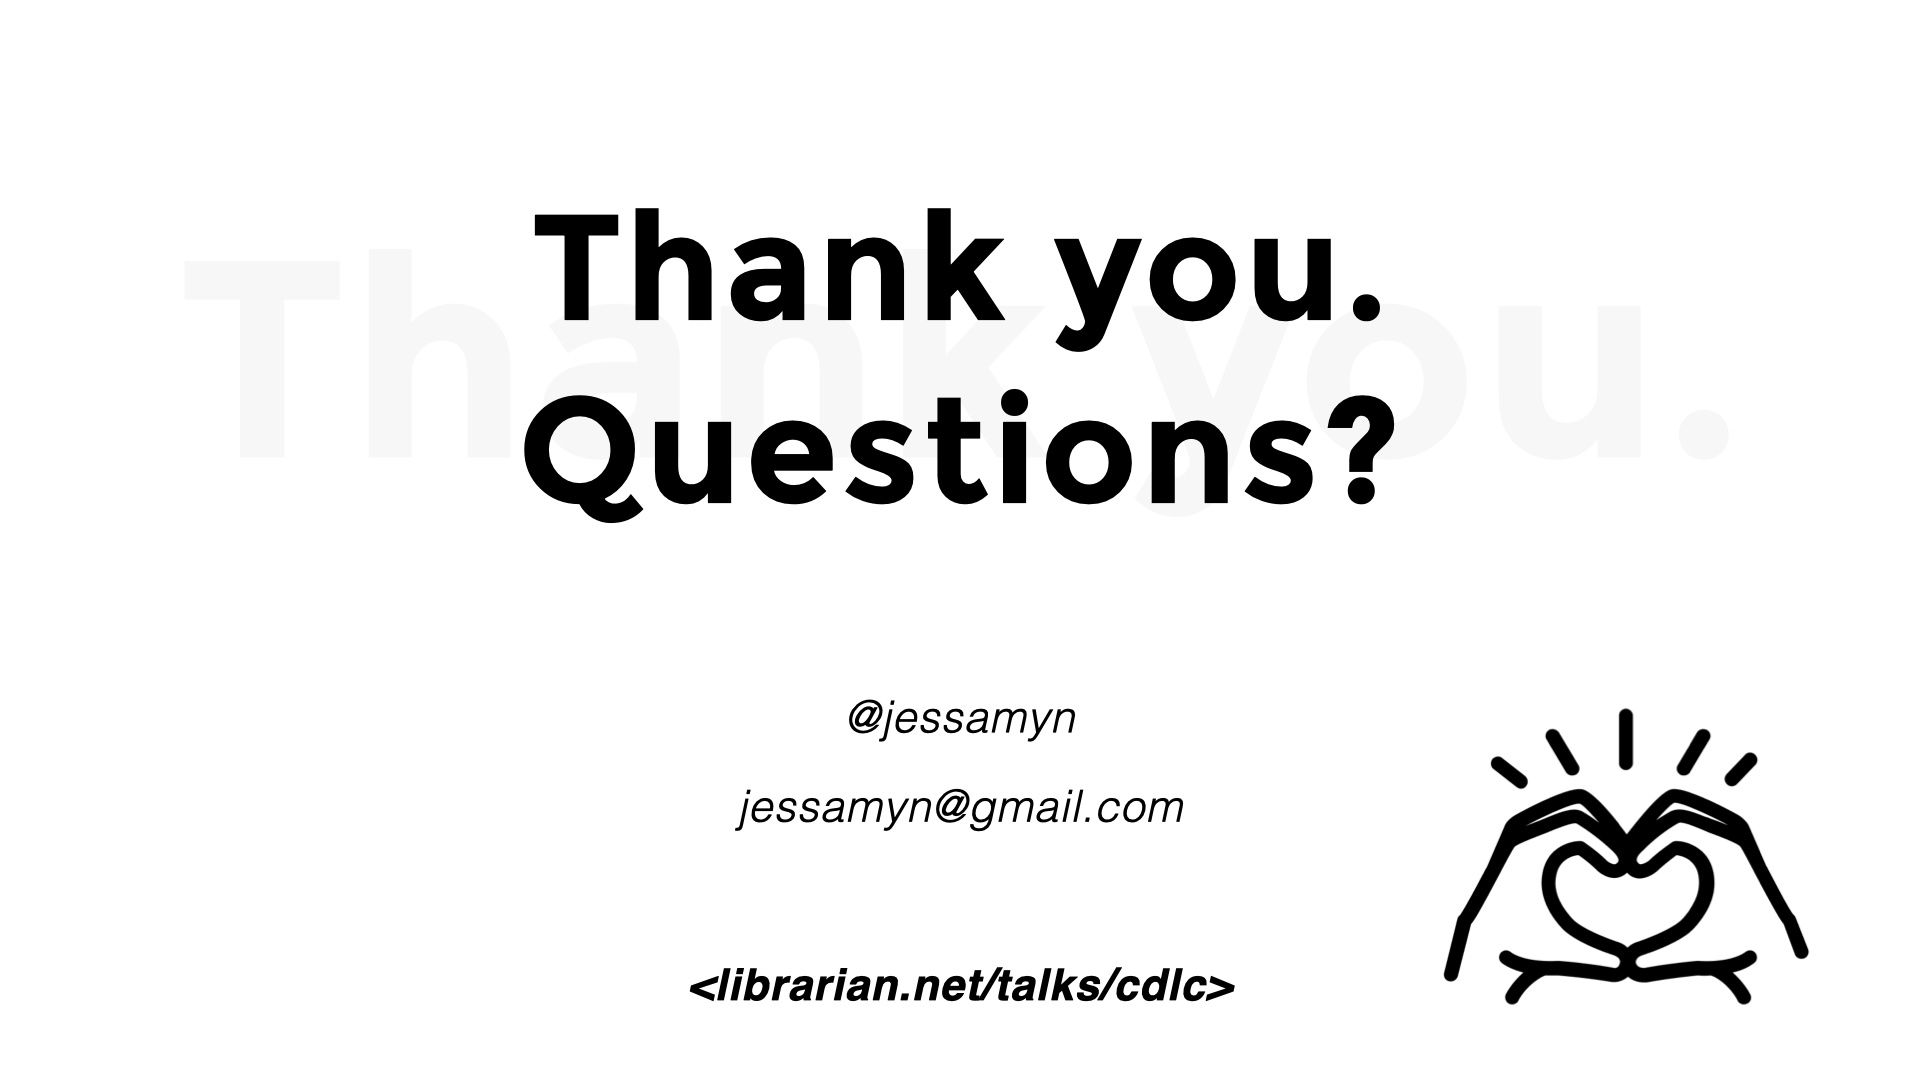 Thank you. Questions? URL of talk, jessamyn@gmail.com and @jessamyn twitter handle.